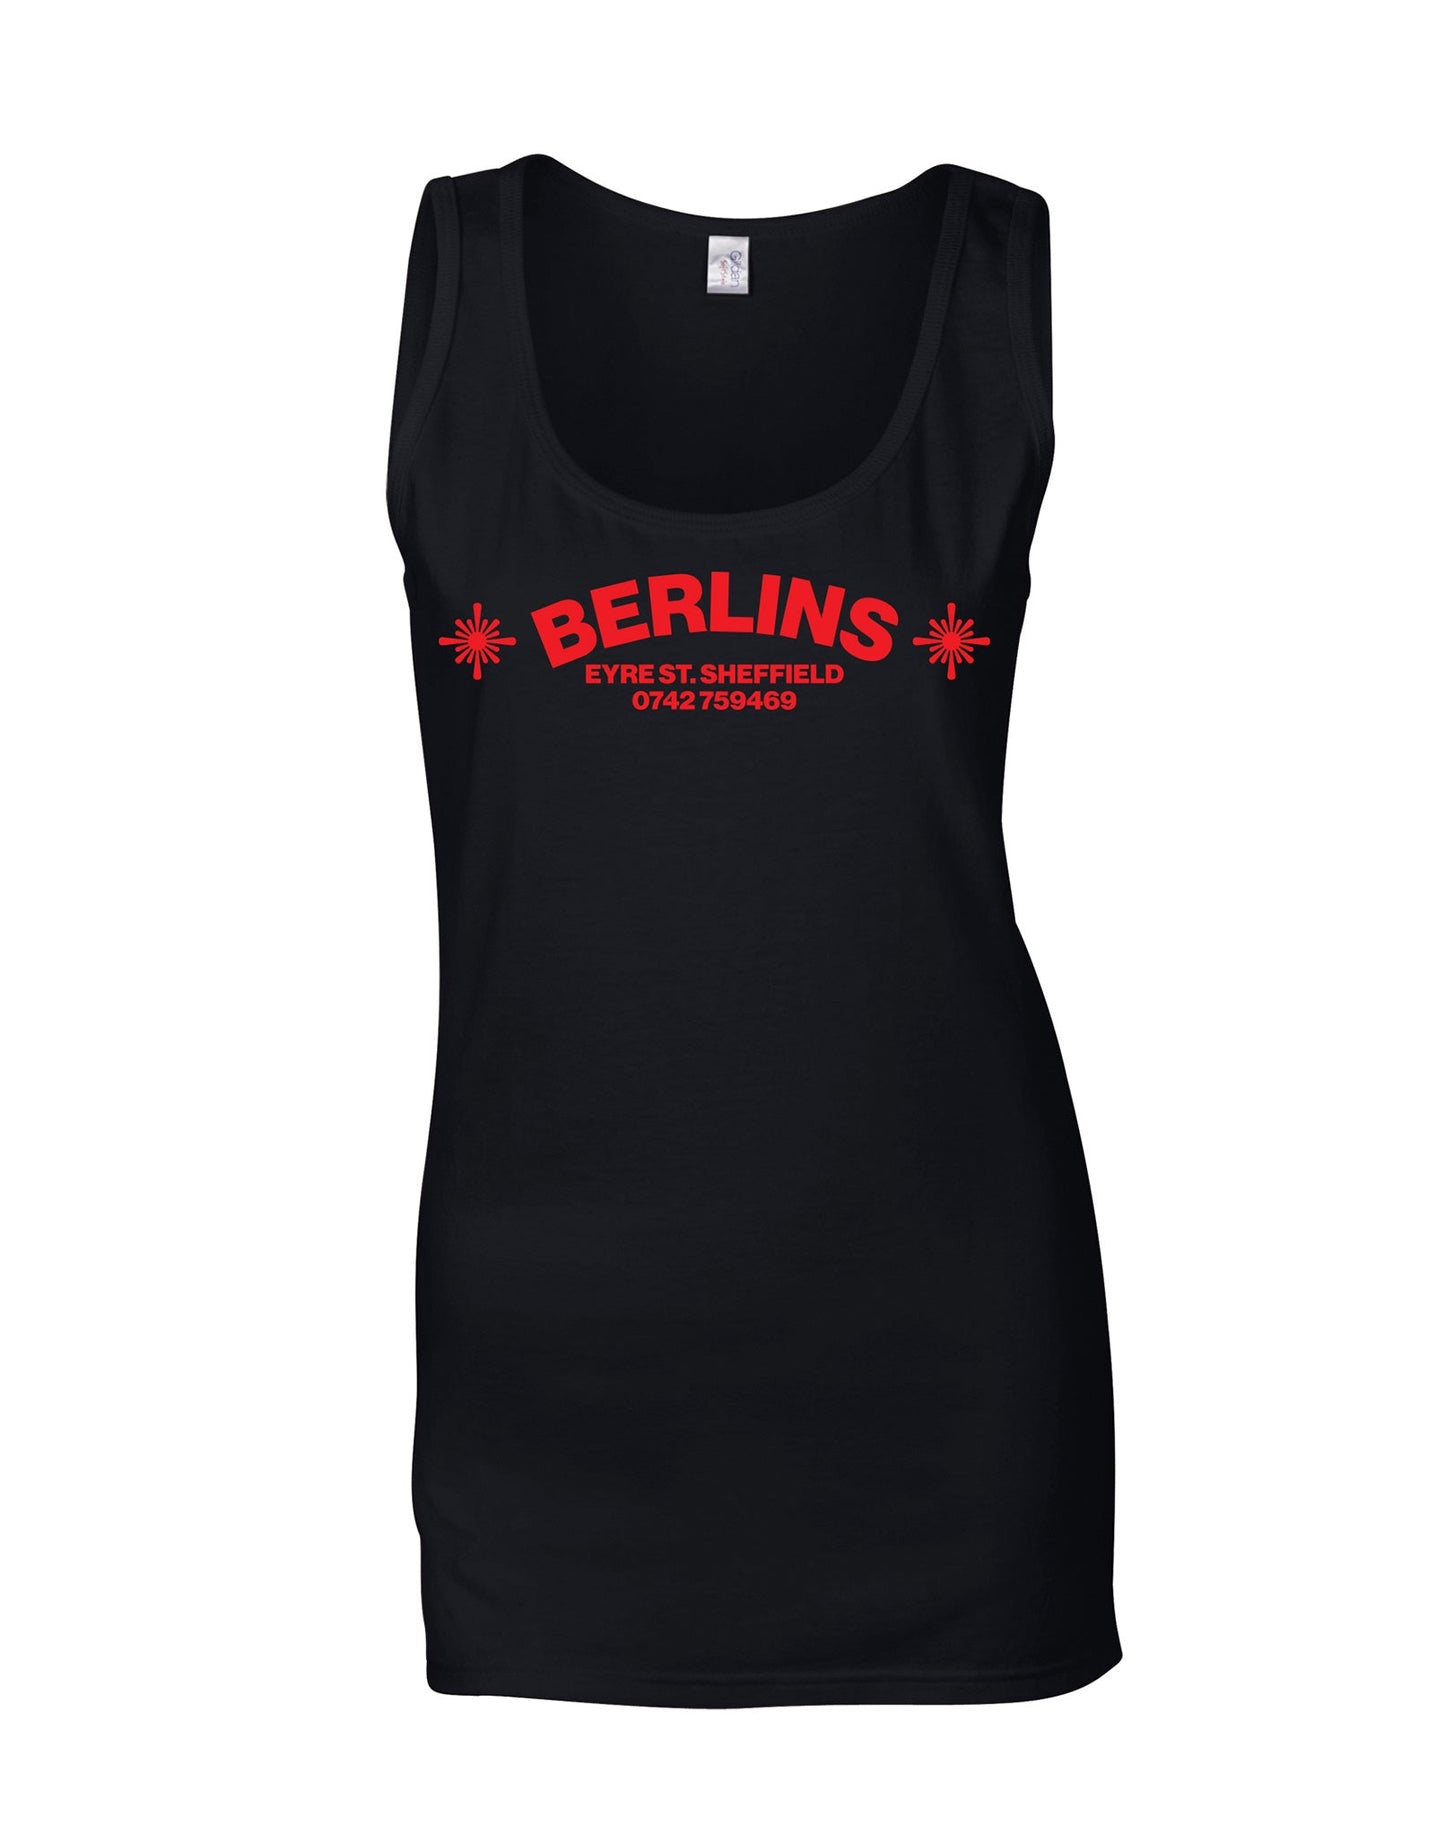 Berlins ladies fit vest - various colours - Dirty Stop Outs